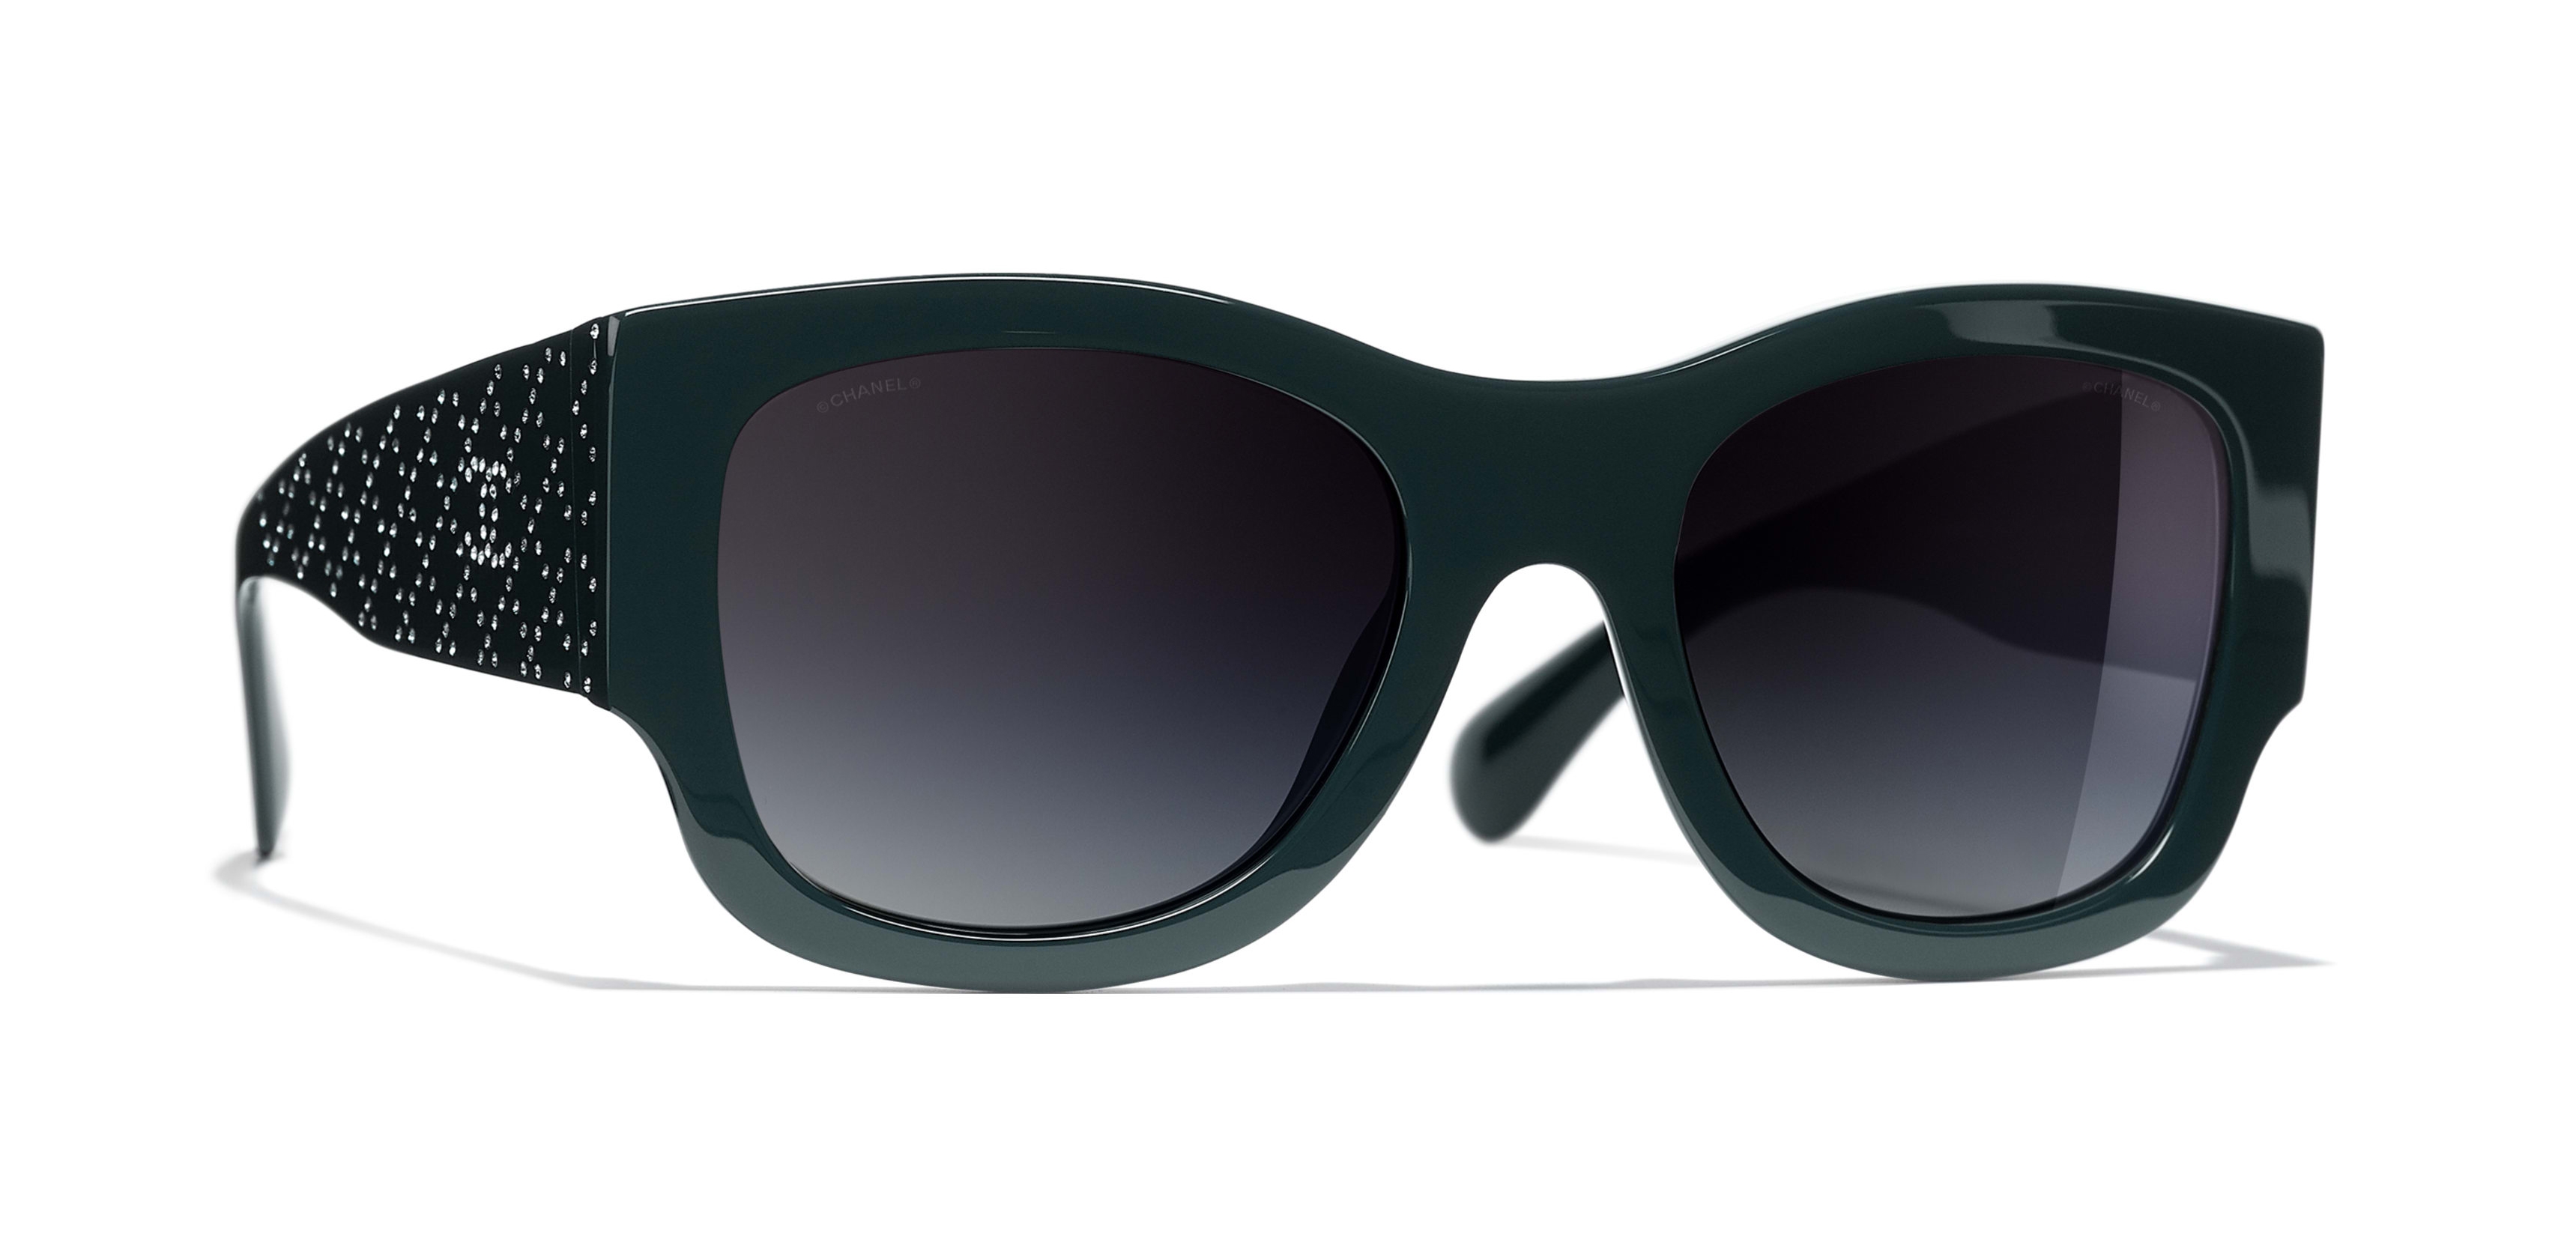 Chanel - Square Sunglasses - White Gray - Chanel Eyewear - Avvenice